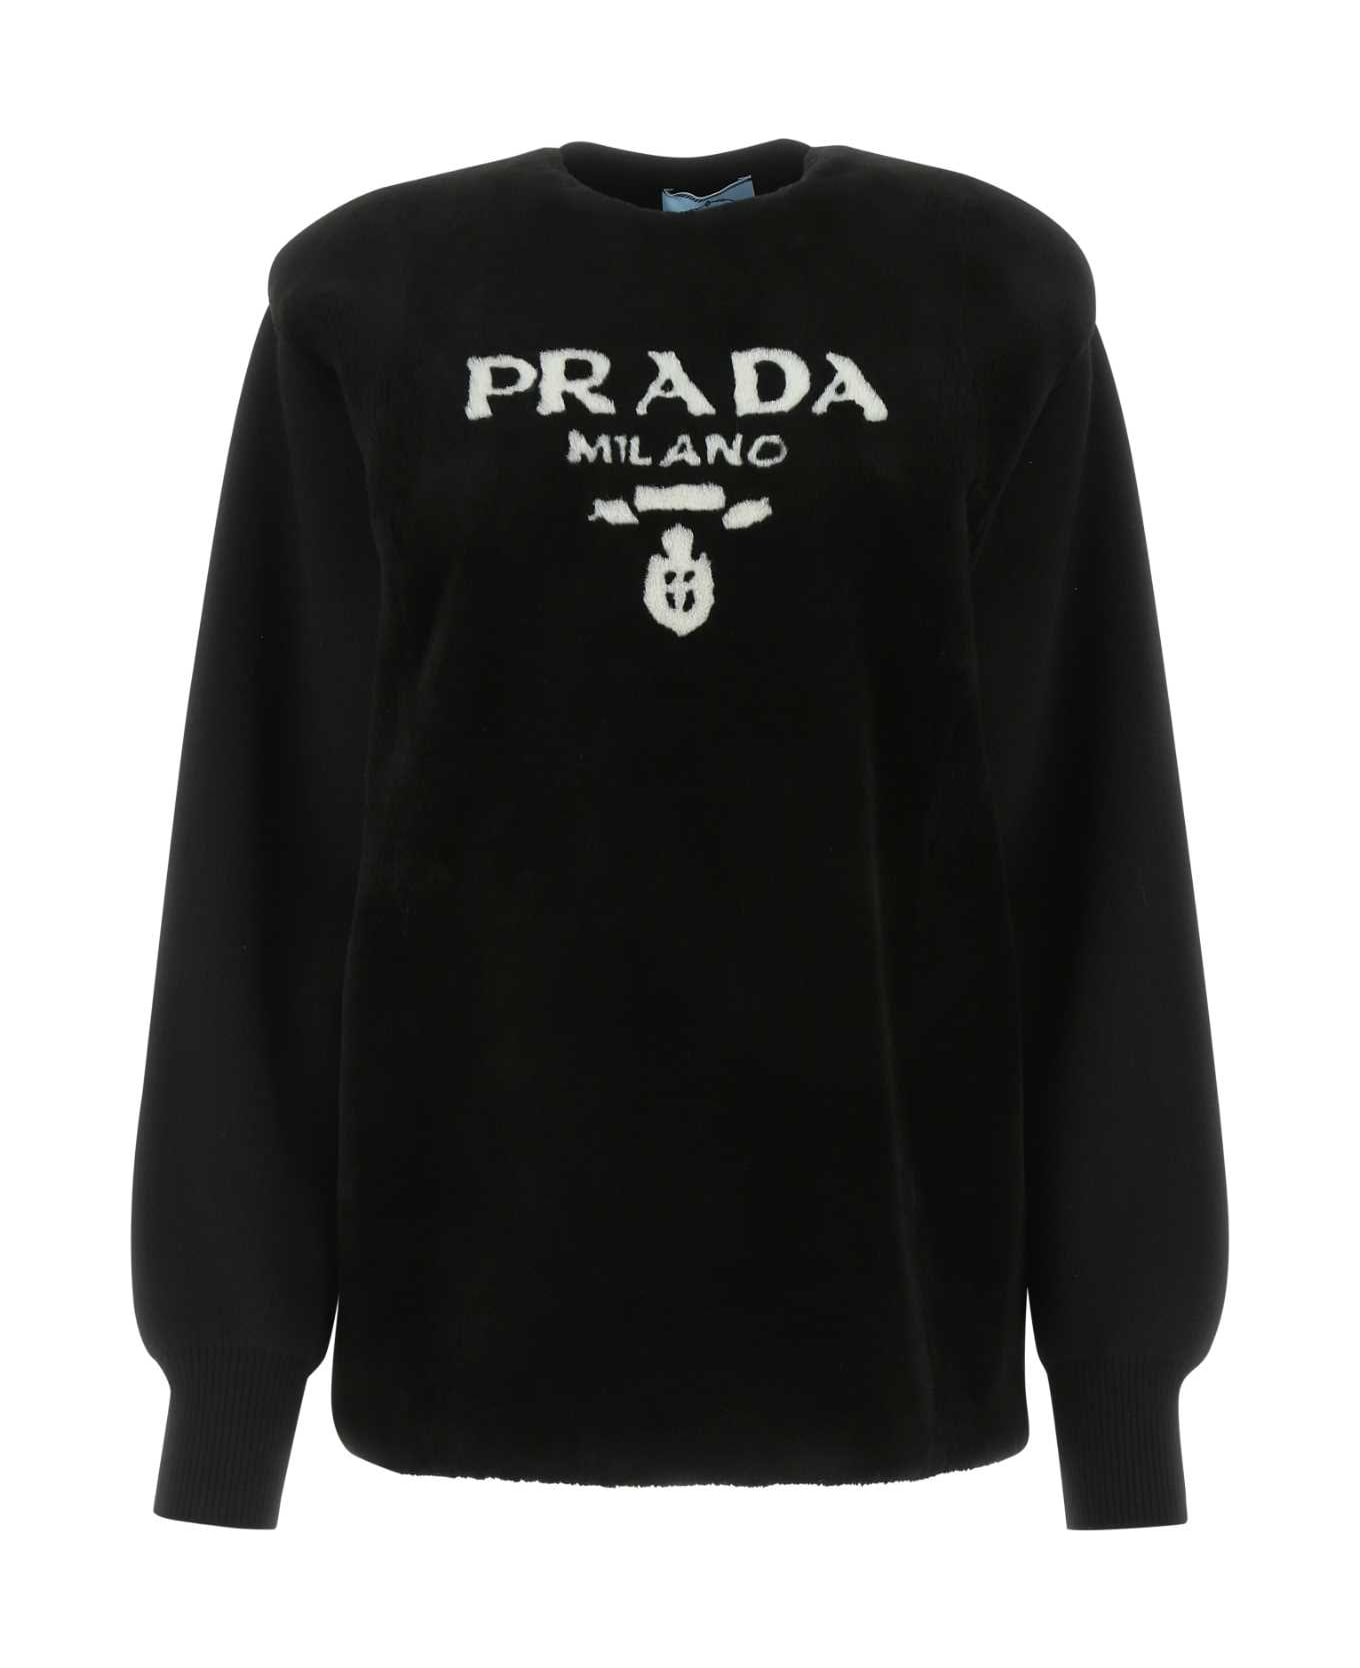 Prada Black Cashmere Sweater - NERO フリース